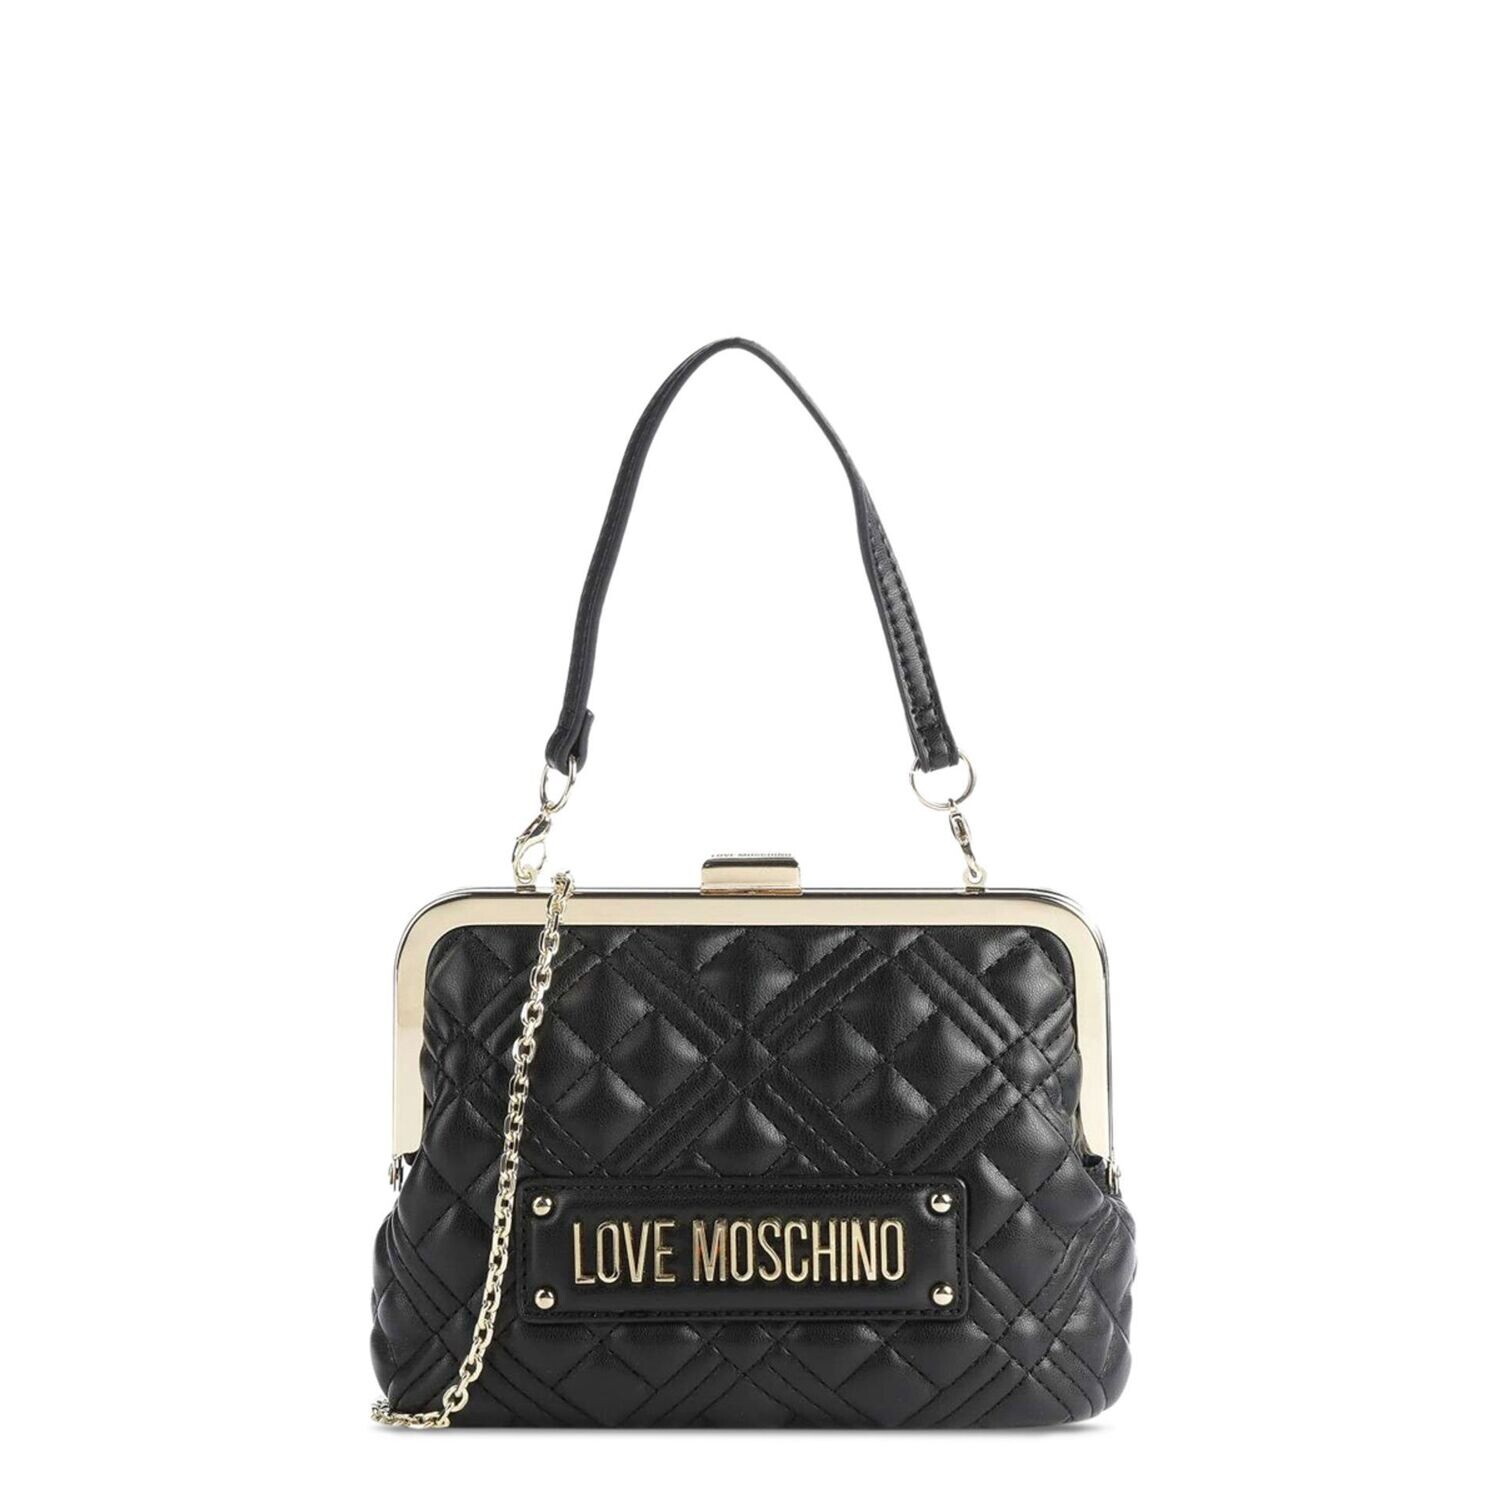 Love Moschino Black Clutch Bag